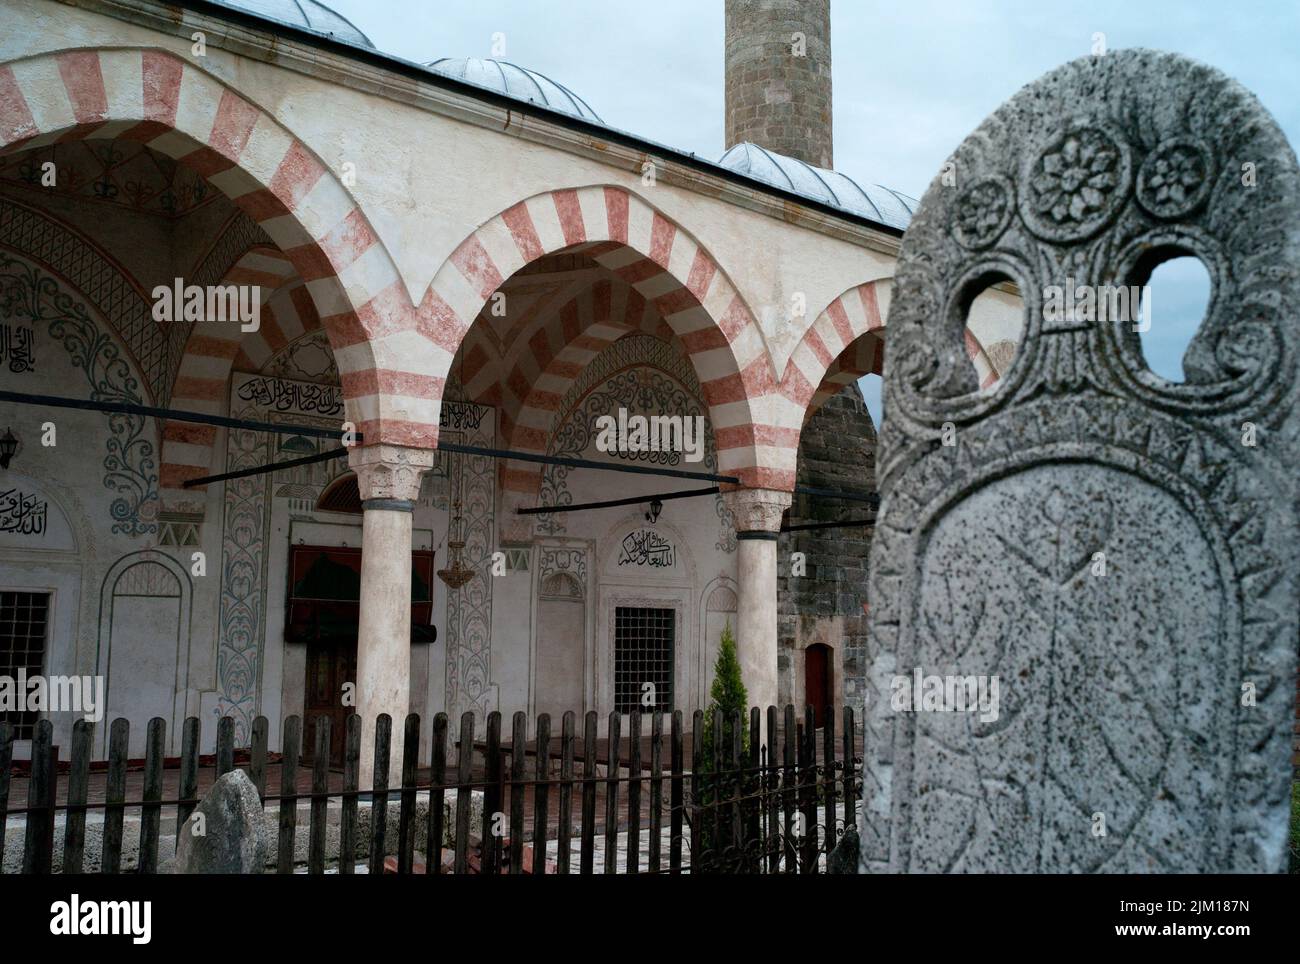 Kosovo, pierre tombale musulmane dehors comme mosquée. Banque D'Images